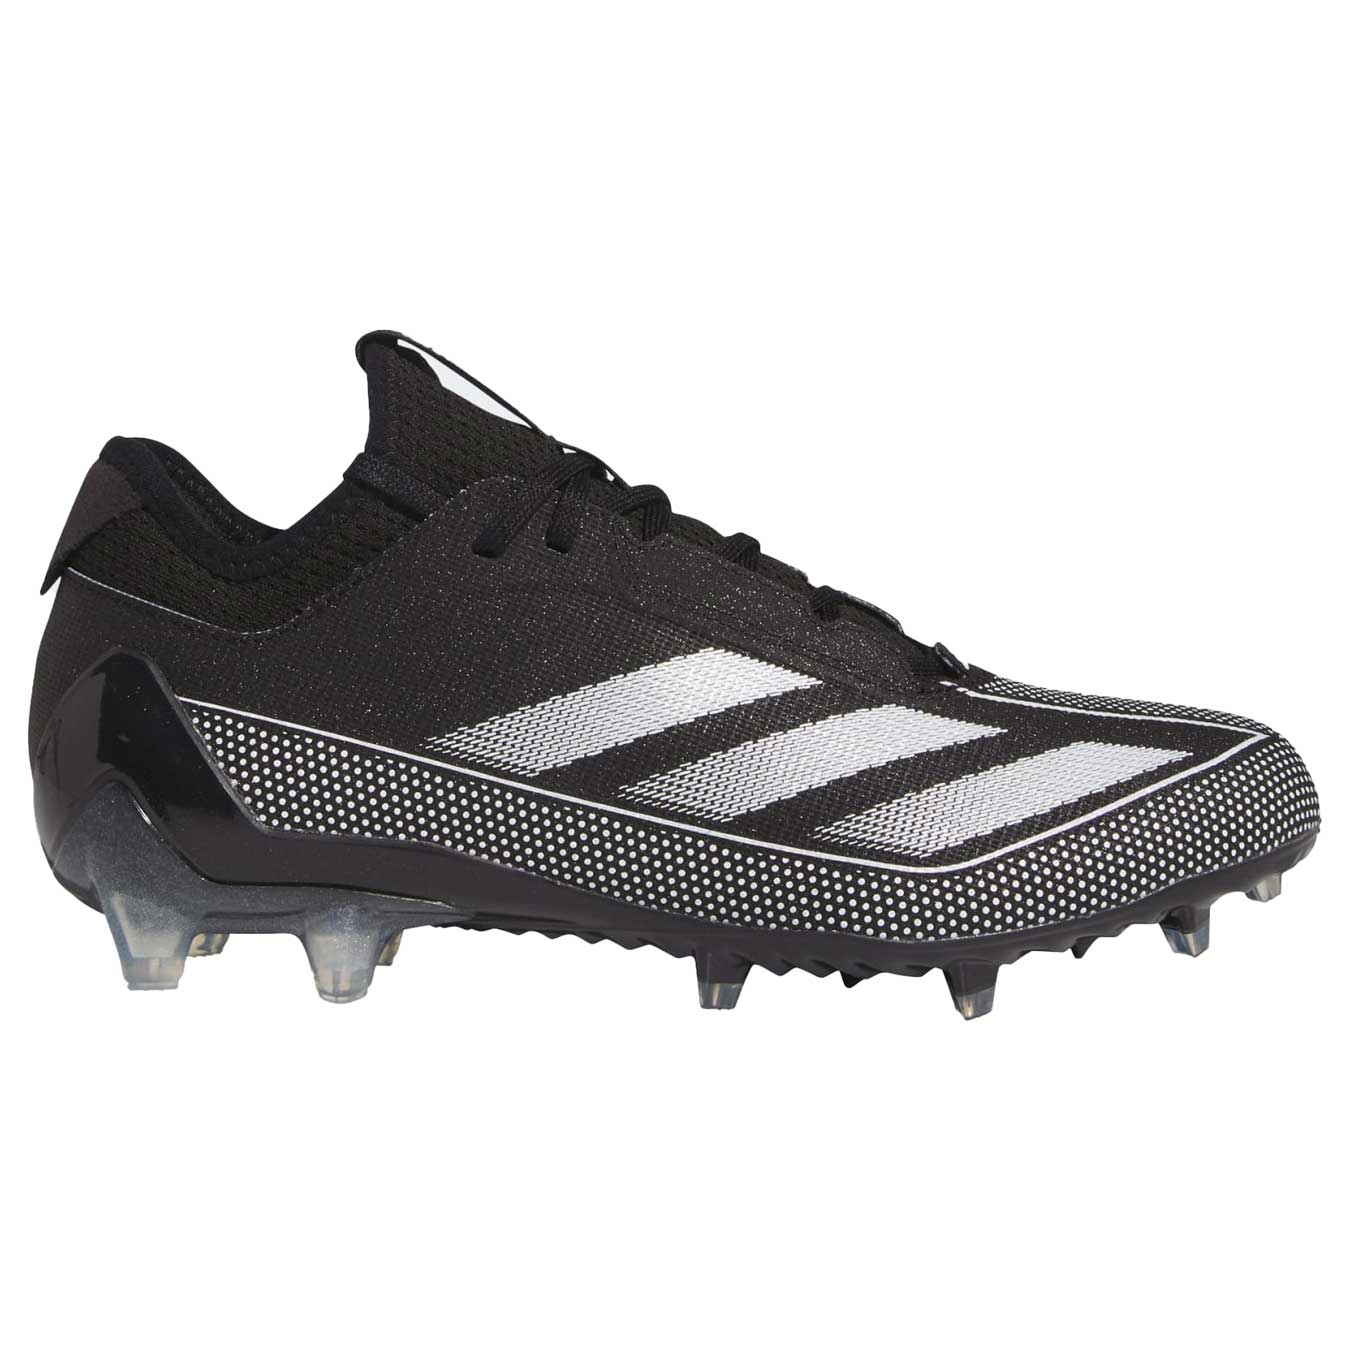 Adidas adizero Electric.1 Black/White Cleats